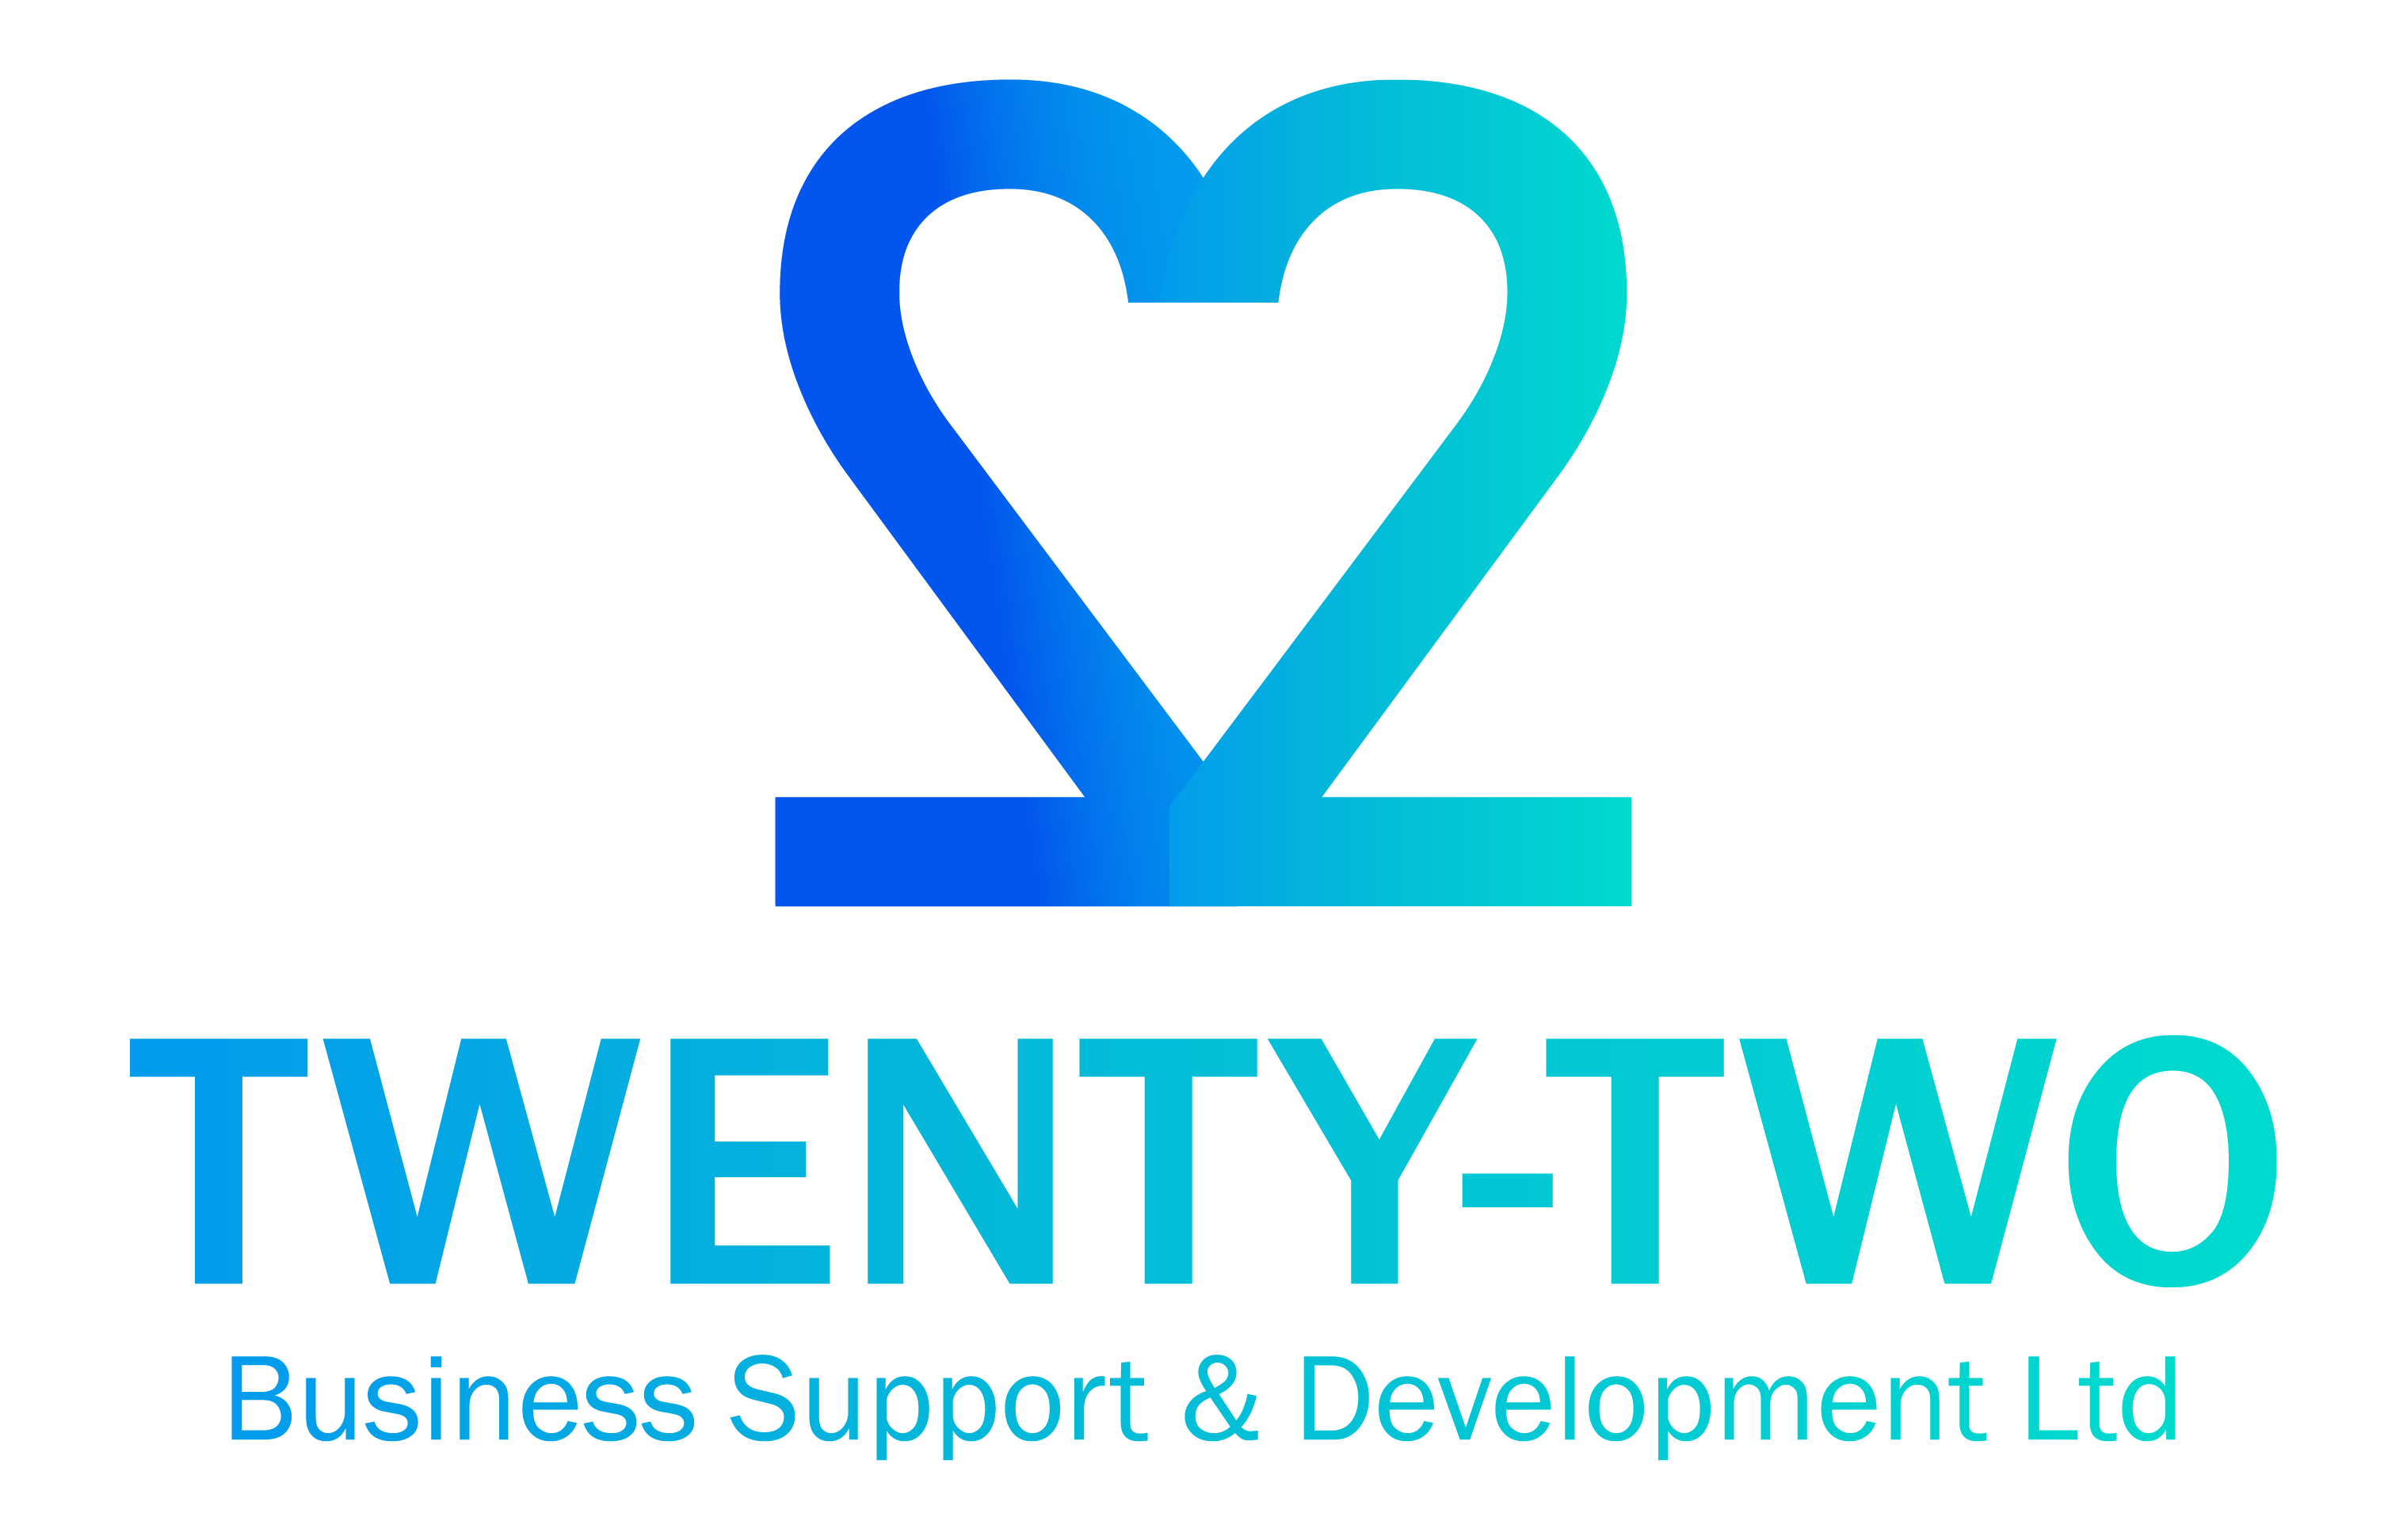 Twenty-Two Business Support & Development Ltd logo.